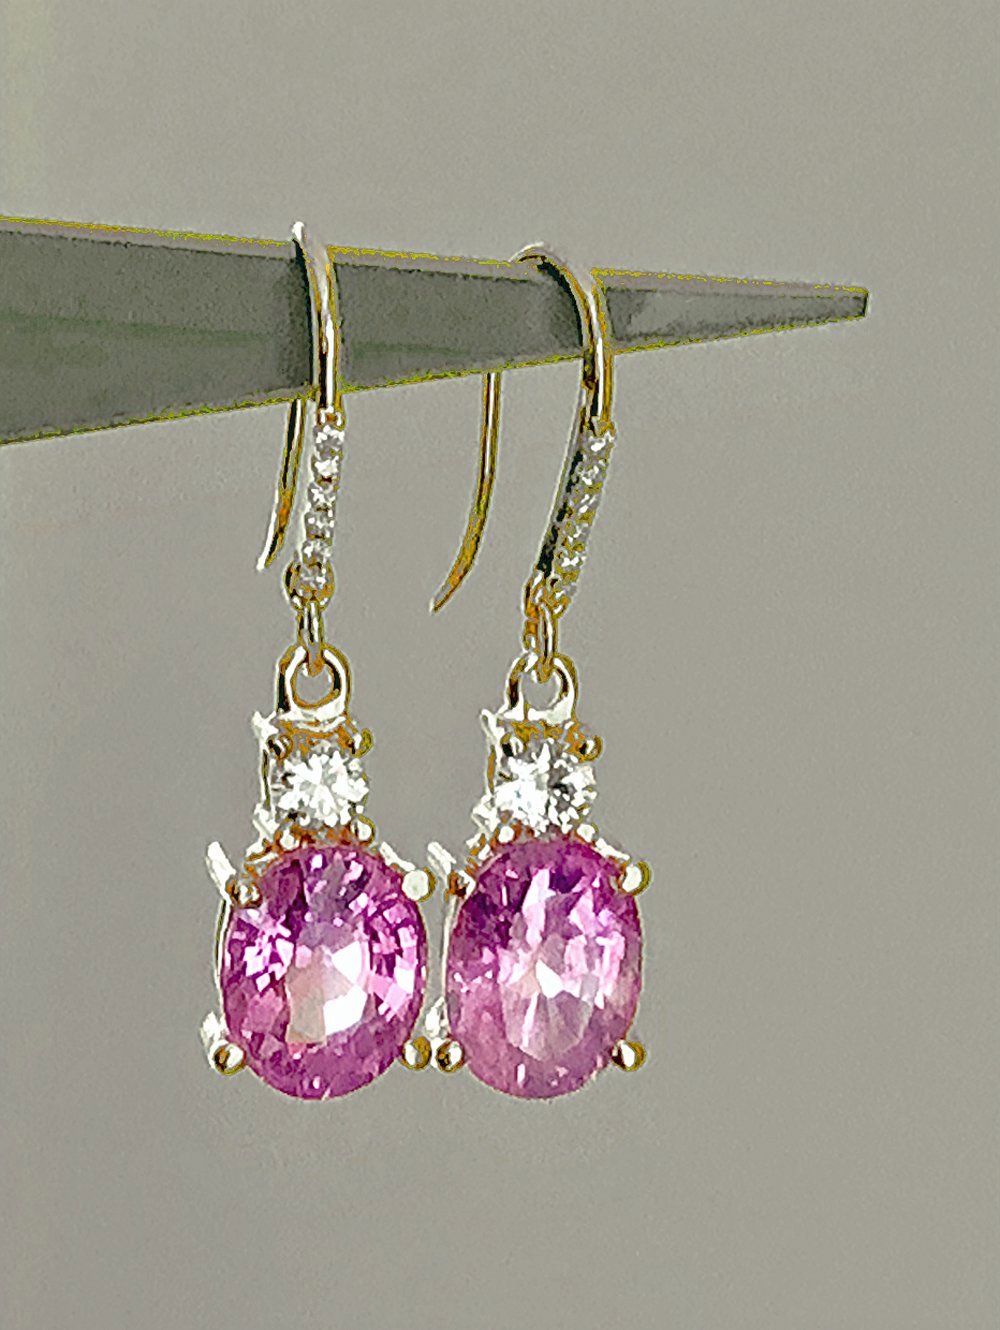 7.25ct Natural Burma Pink Sapphire Diamond Earrings 18k Gold